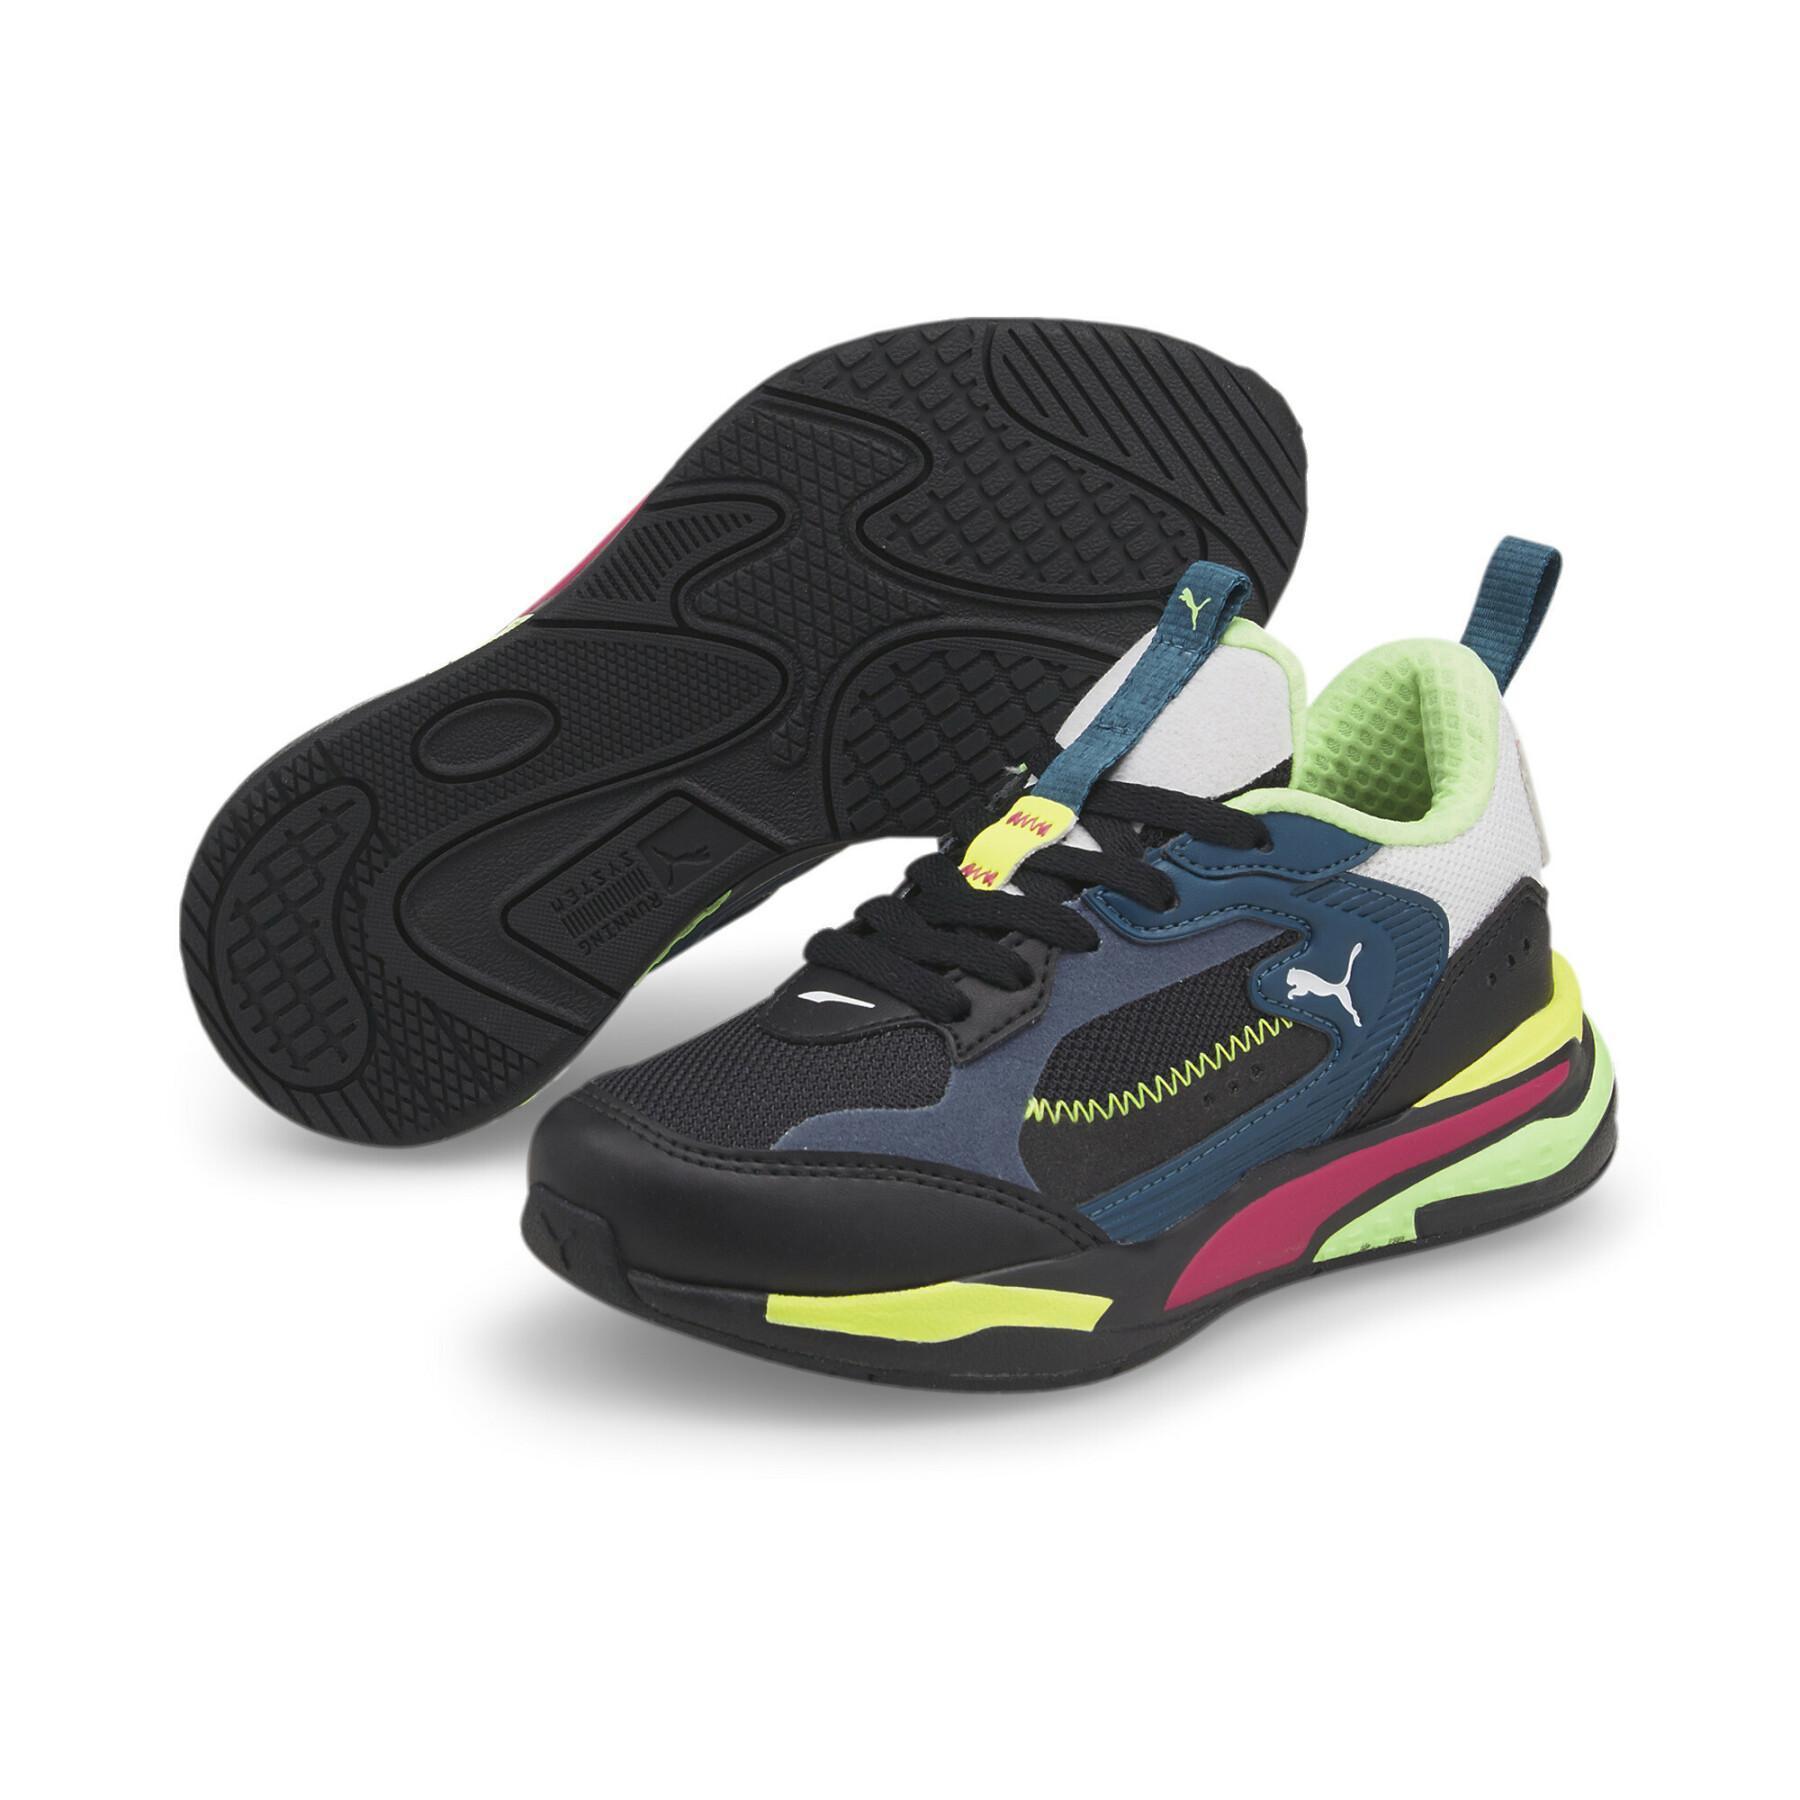 Zapatos para niños Puma RS-Fast Limiter PS